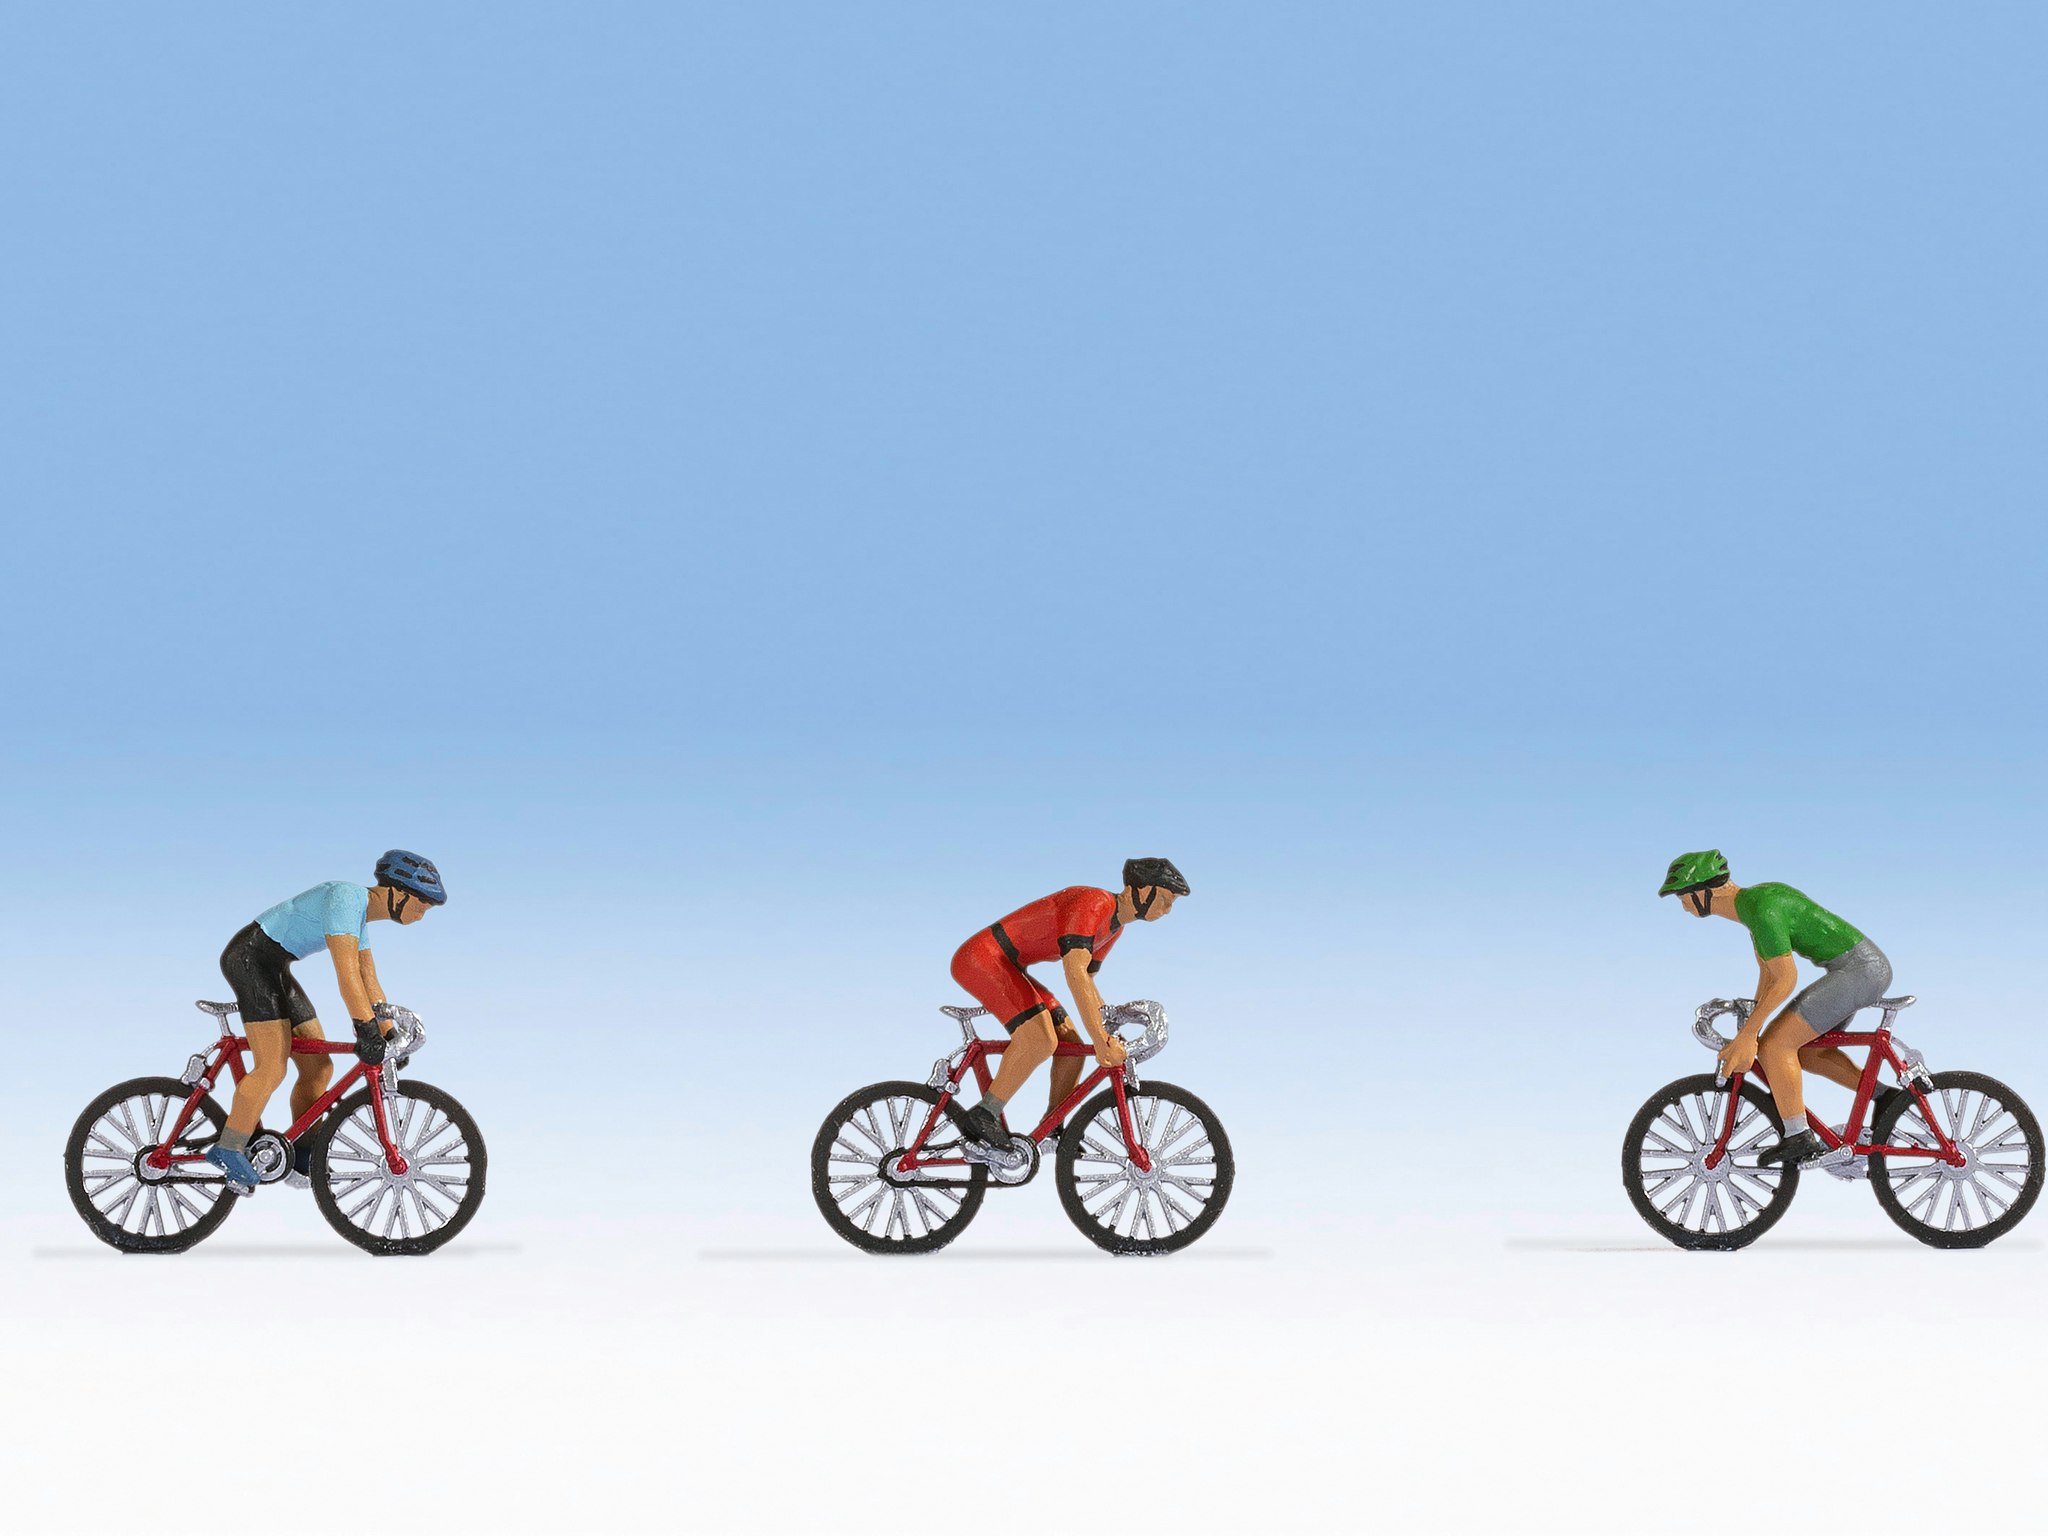 NOCH 15897 Skala H0, Figurer Tävlingscyklister/Figures Bicycle Racers